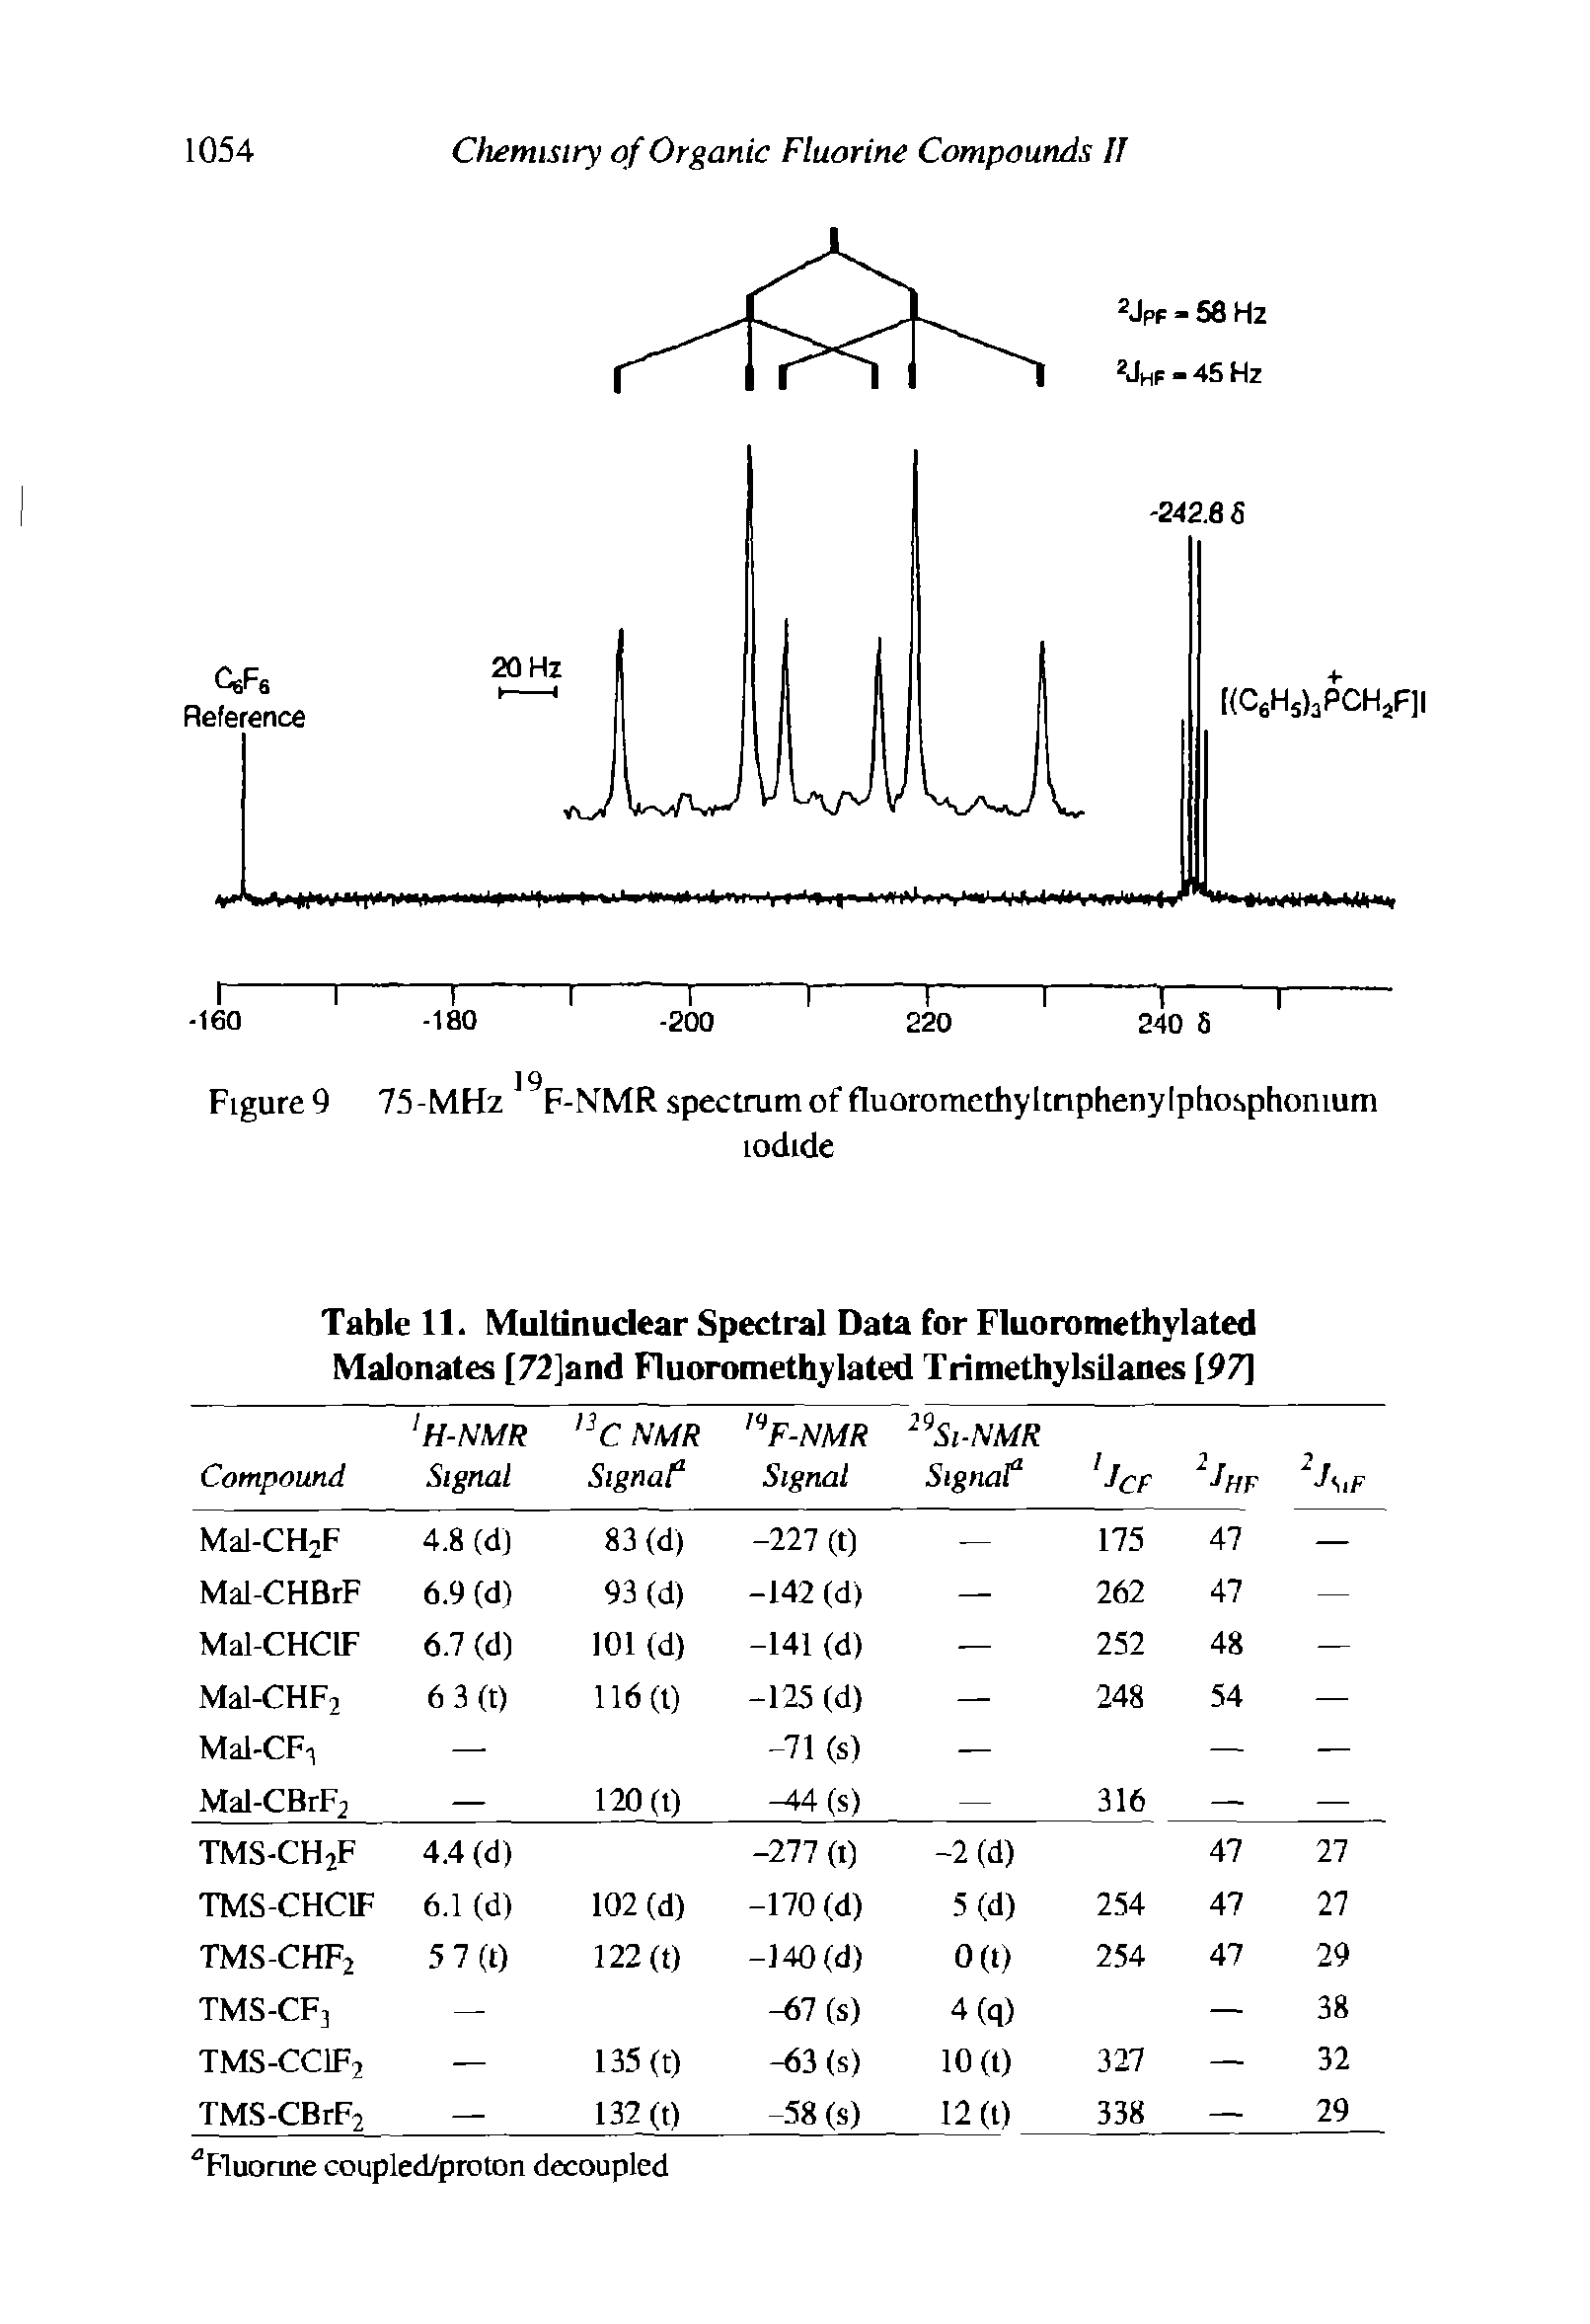 Table 11. Multinudear Spectral Data for Fluoromethylated Malonates [72]and Fluoromethylated Trimethylsilanes [97]...